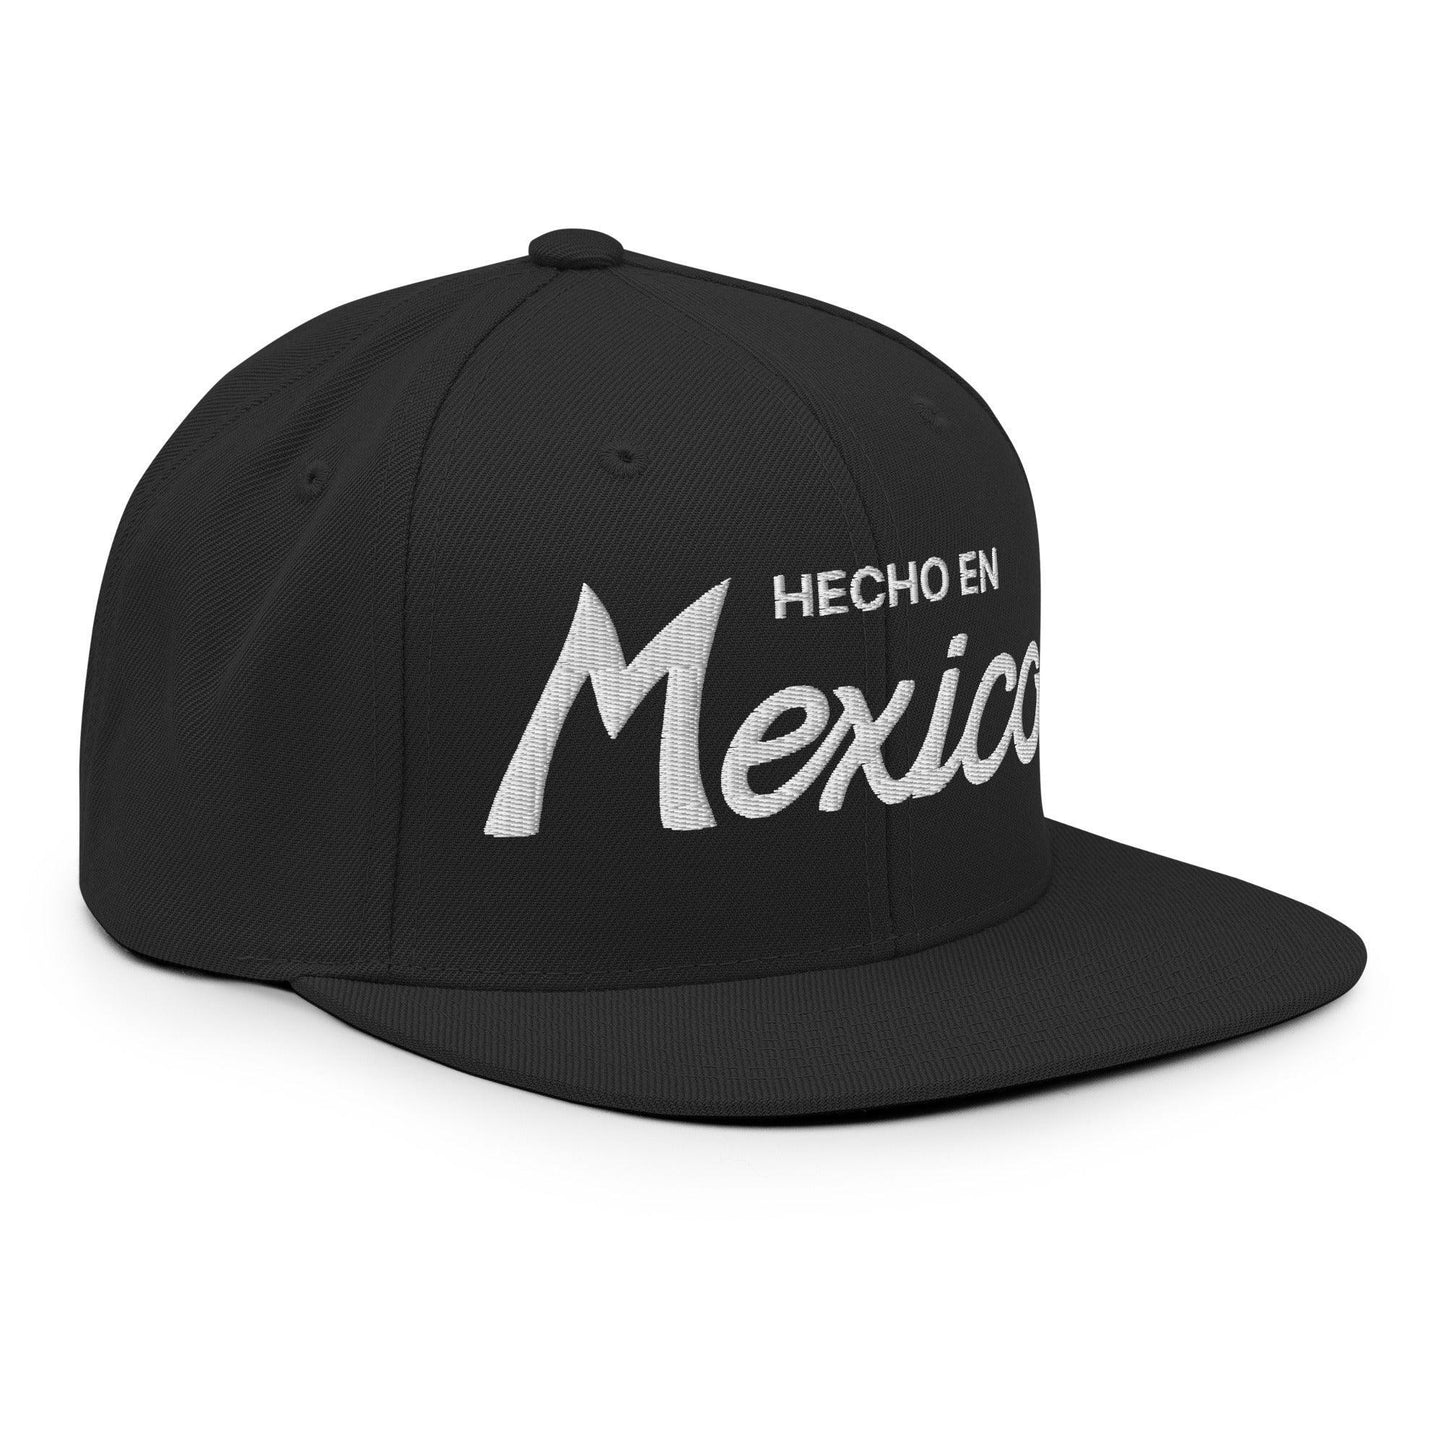 Hecho en Mexico V Script Snapback Hat Black